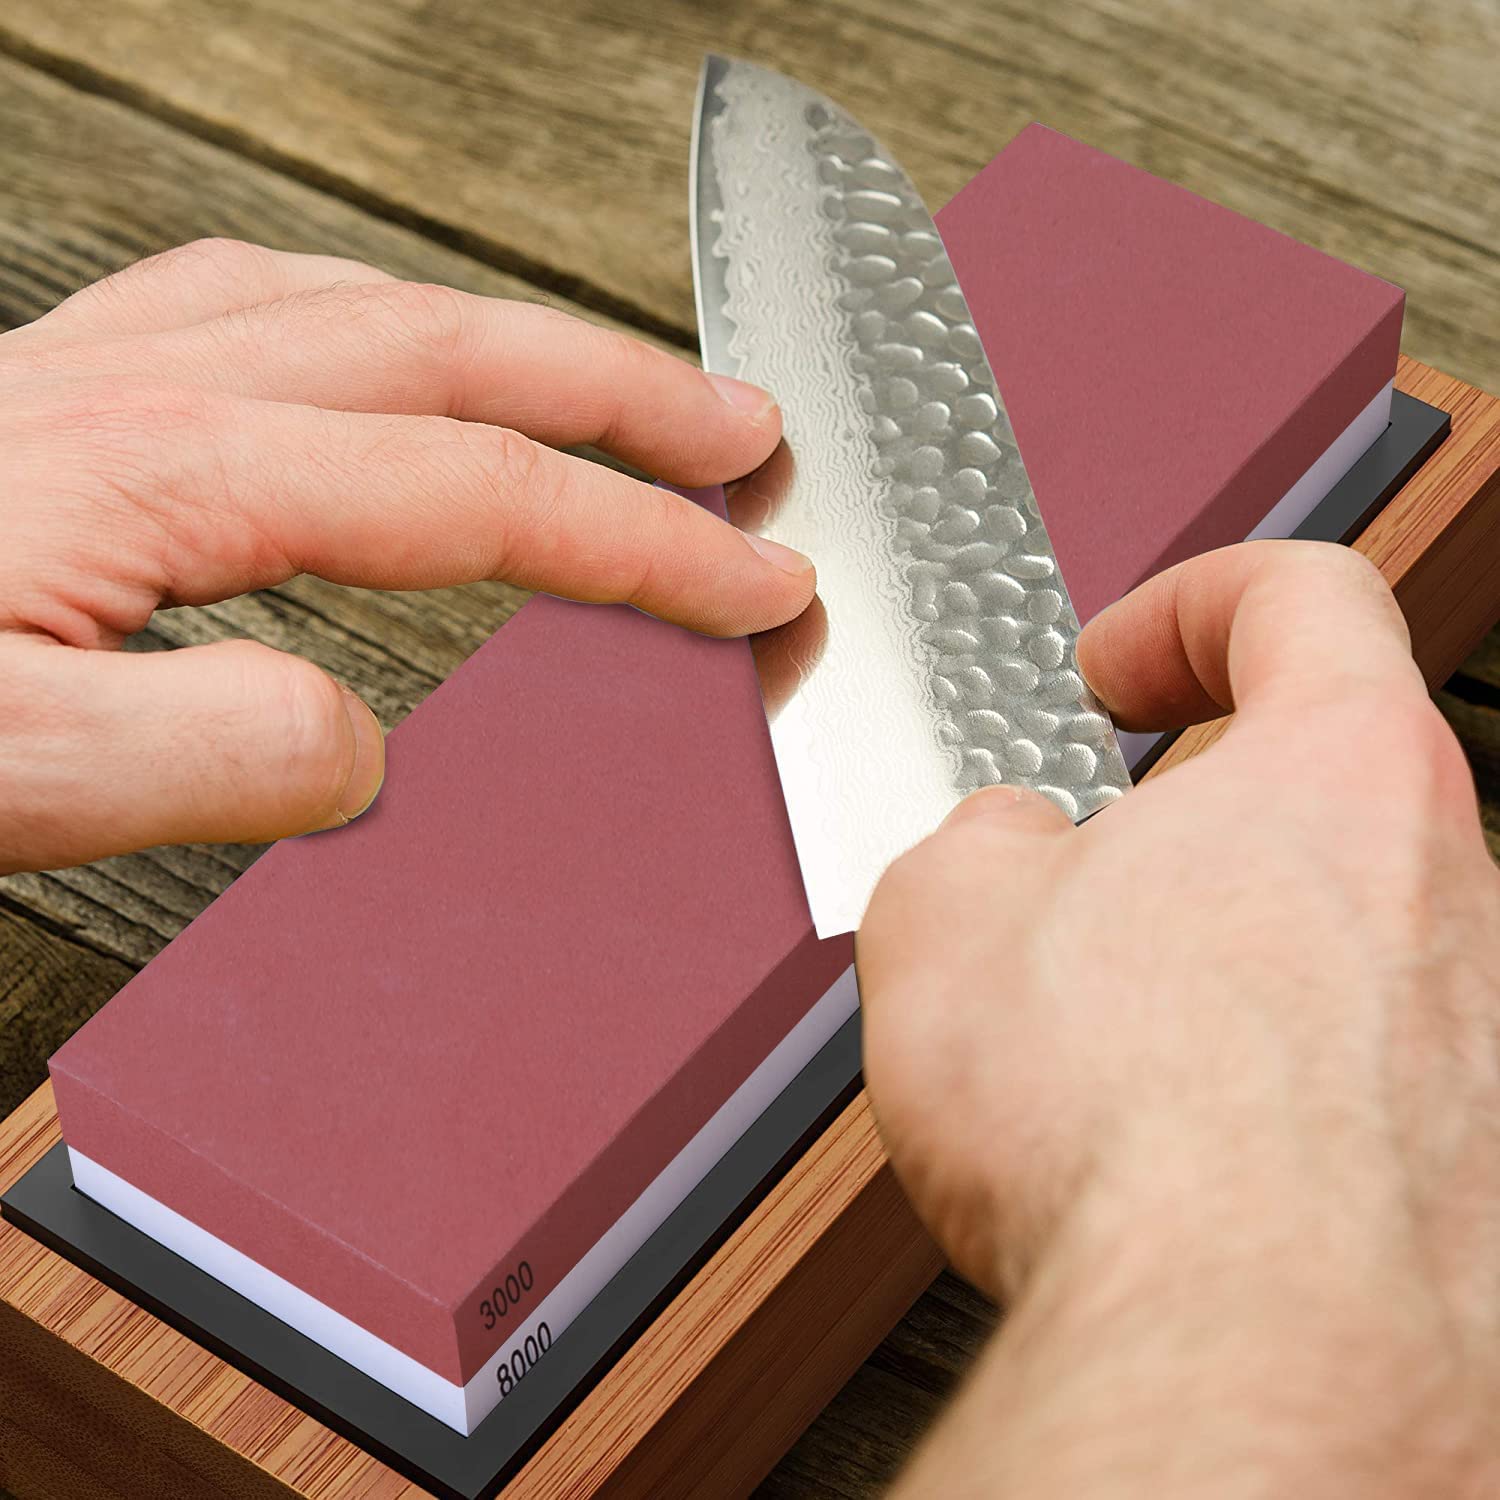 G.B.S Premium Whetstone Knife Sharpening Stone 2 Sided Grit 3000